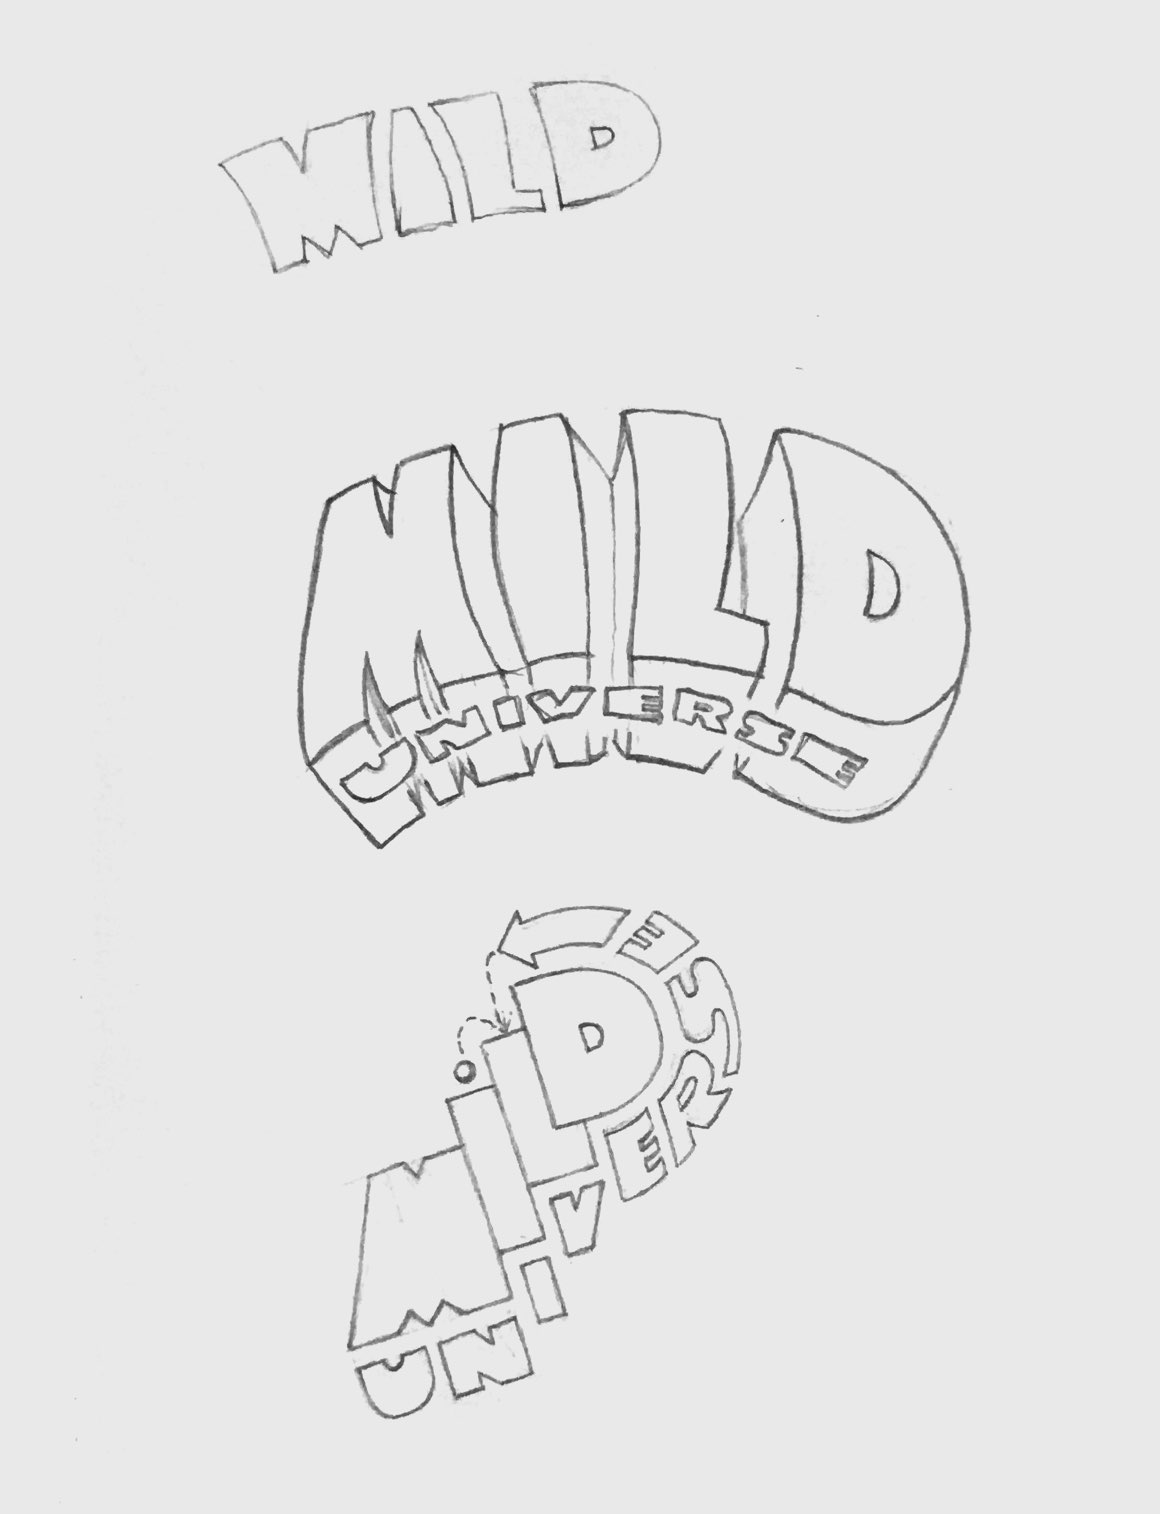 Sketch of the Mild Universe logo